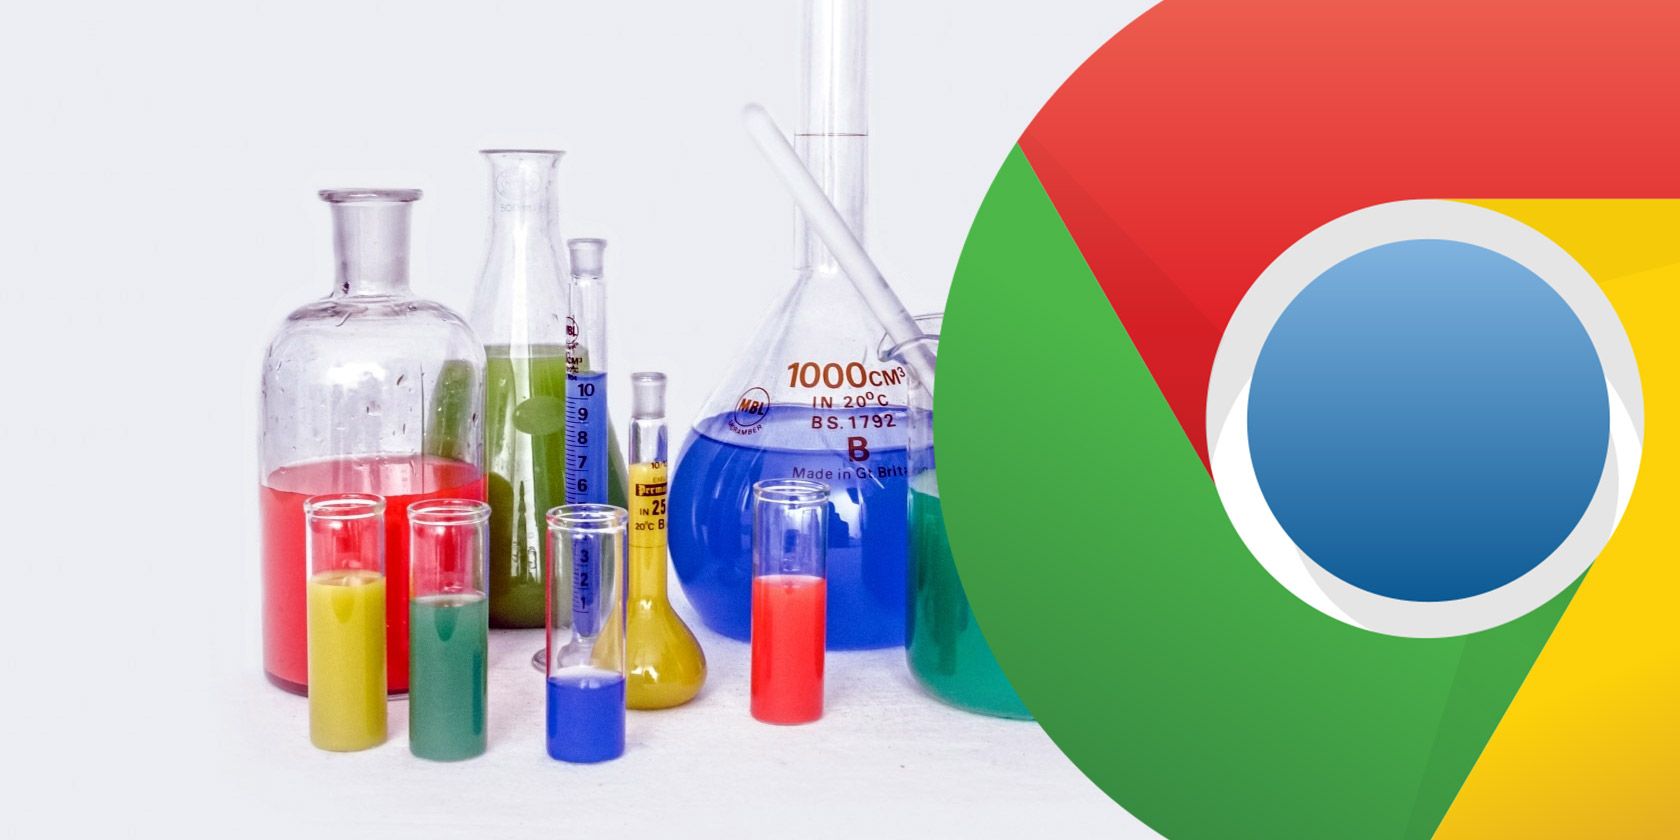 google chrome lab